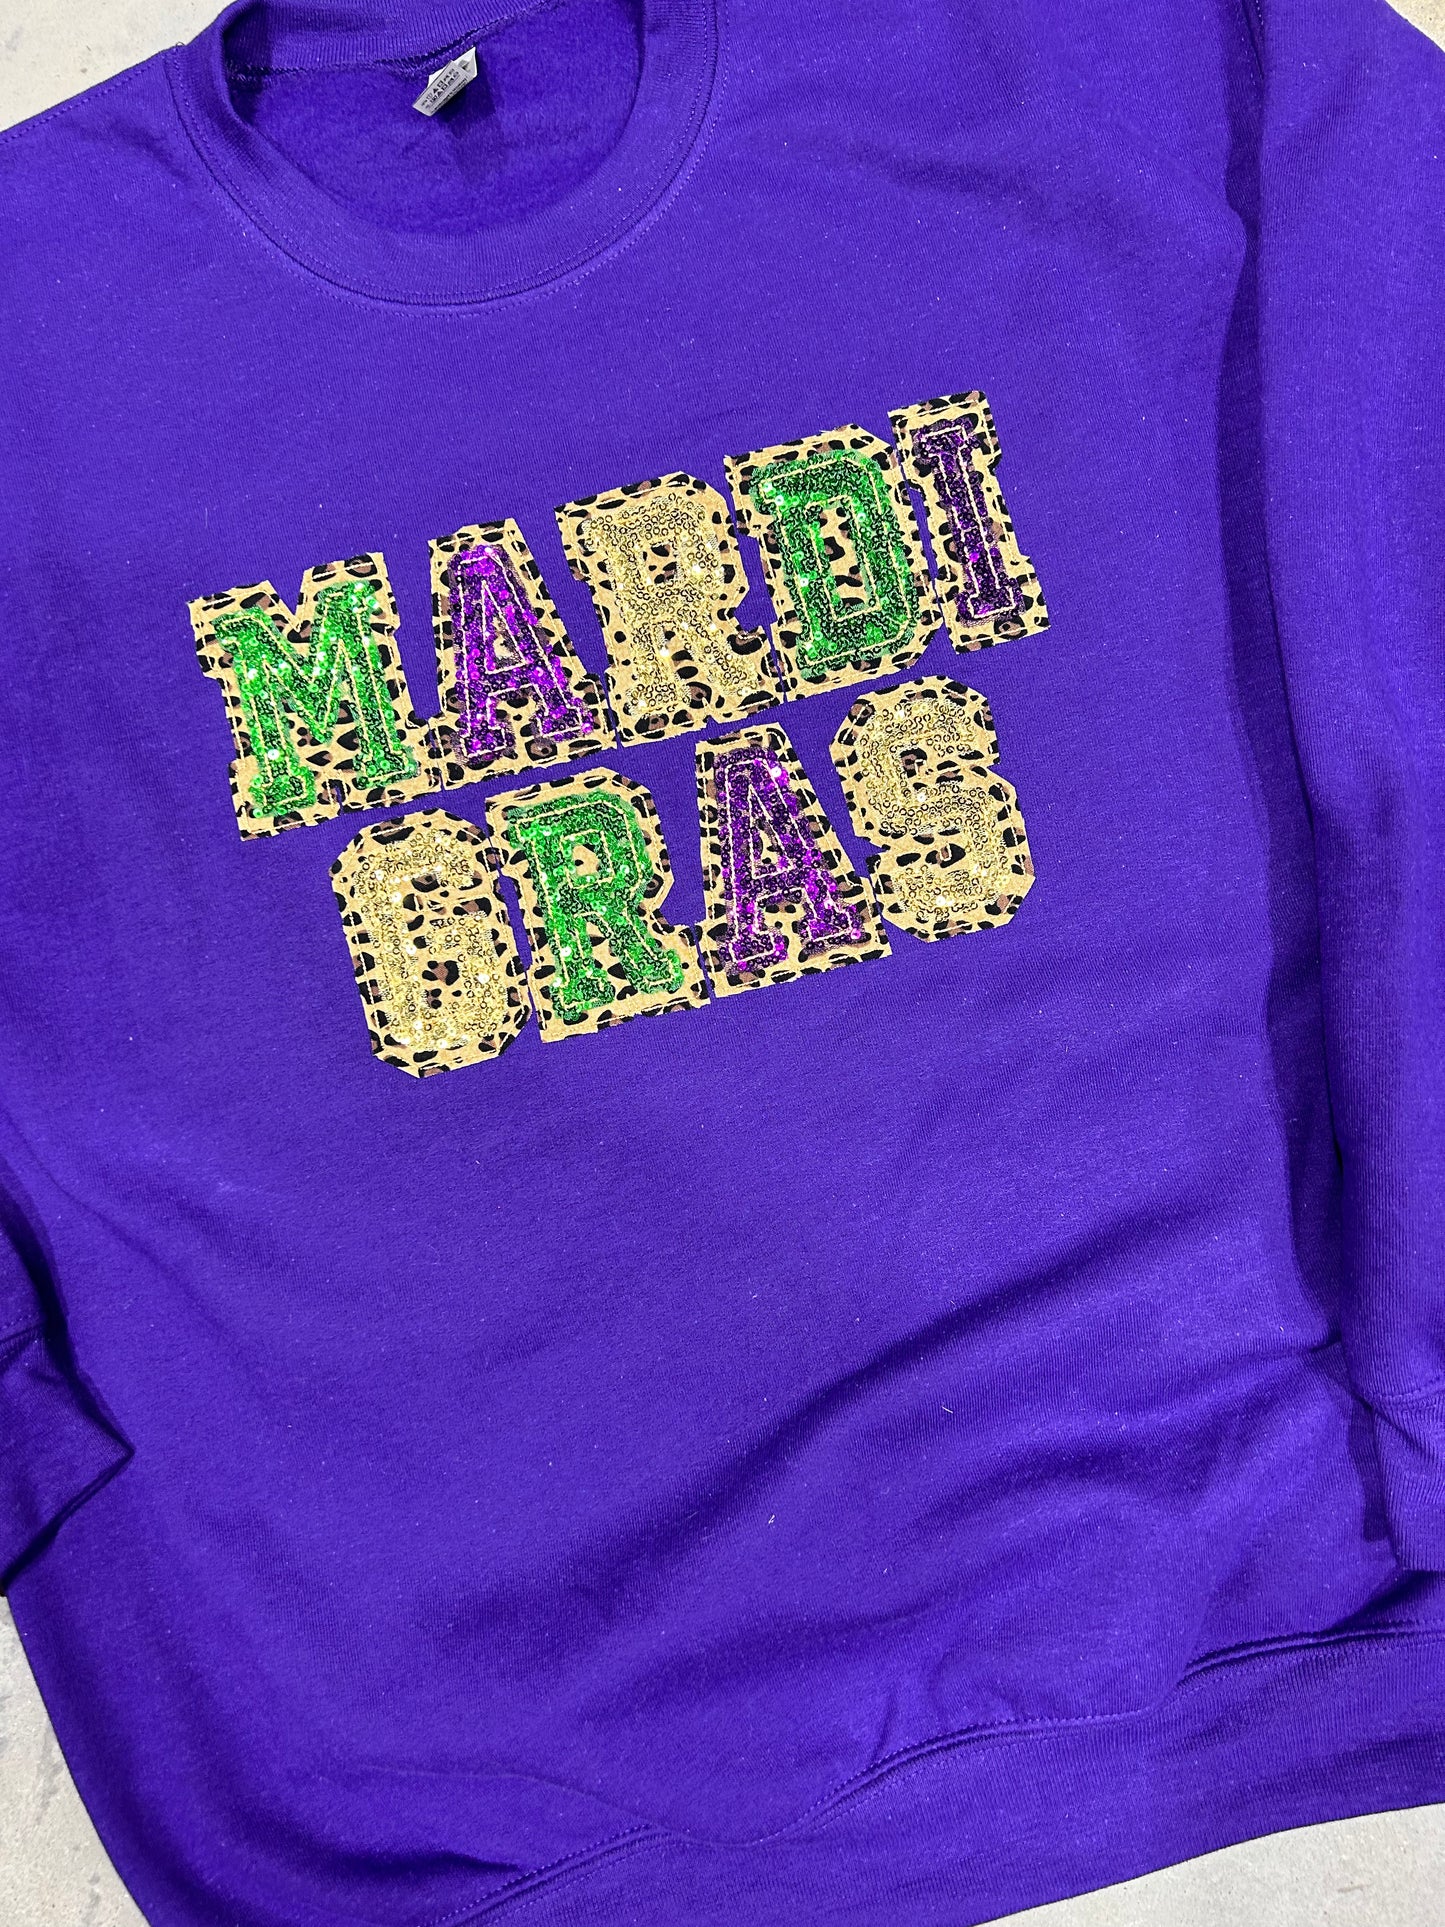 Mardi Gras Embroidered Sweatshirt